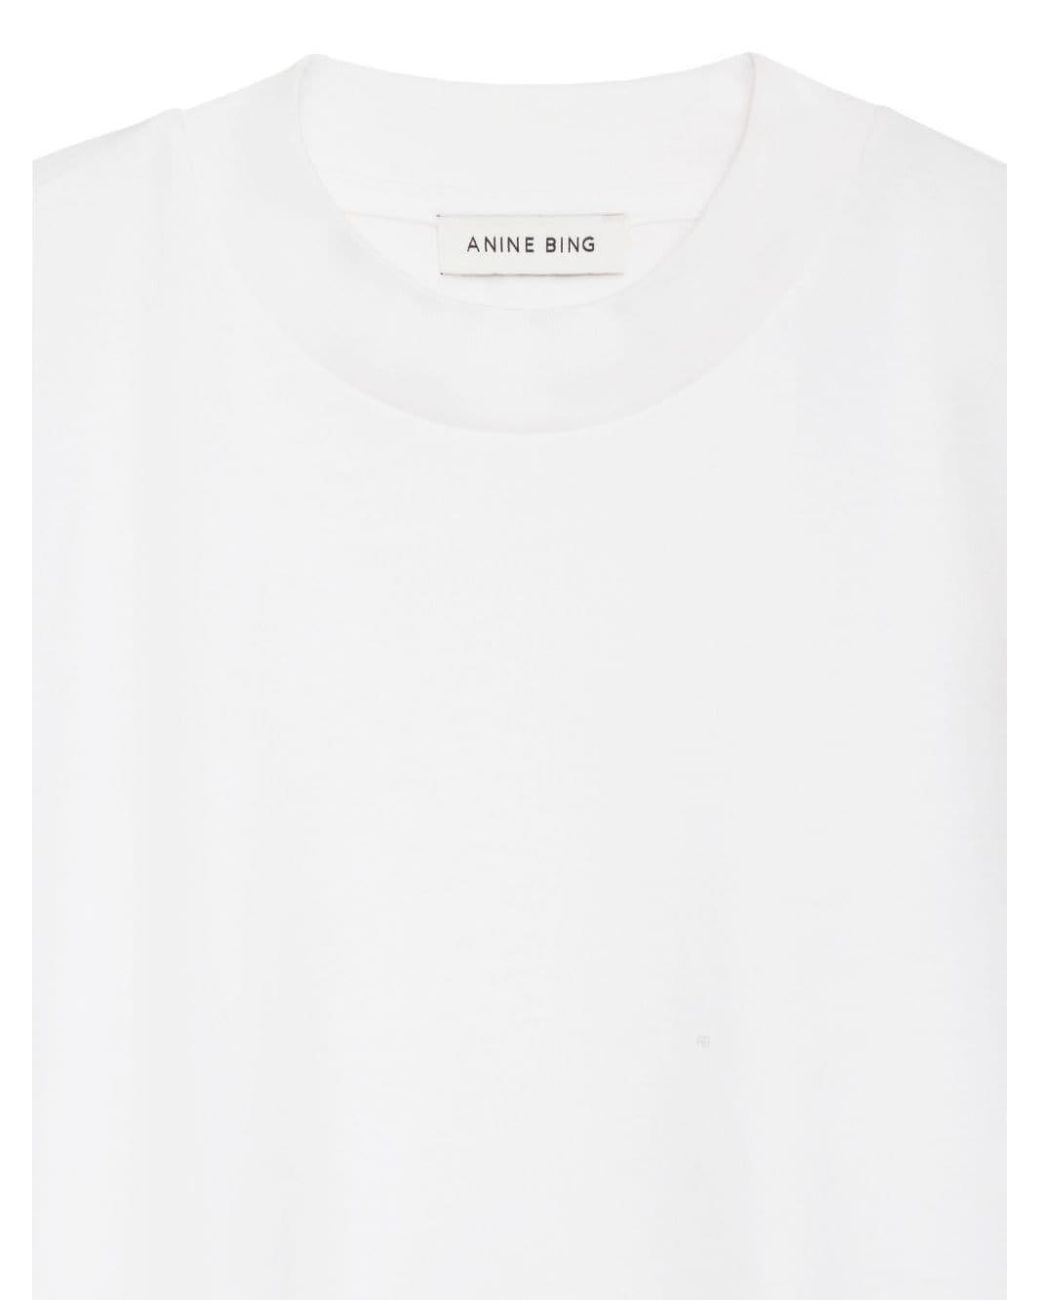 Anine Bing Caspen Cotton T-shirt in White